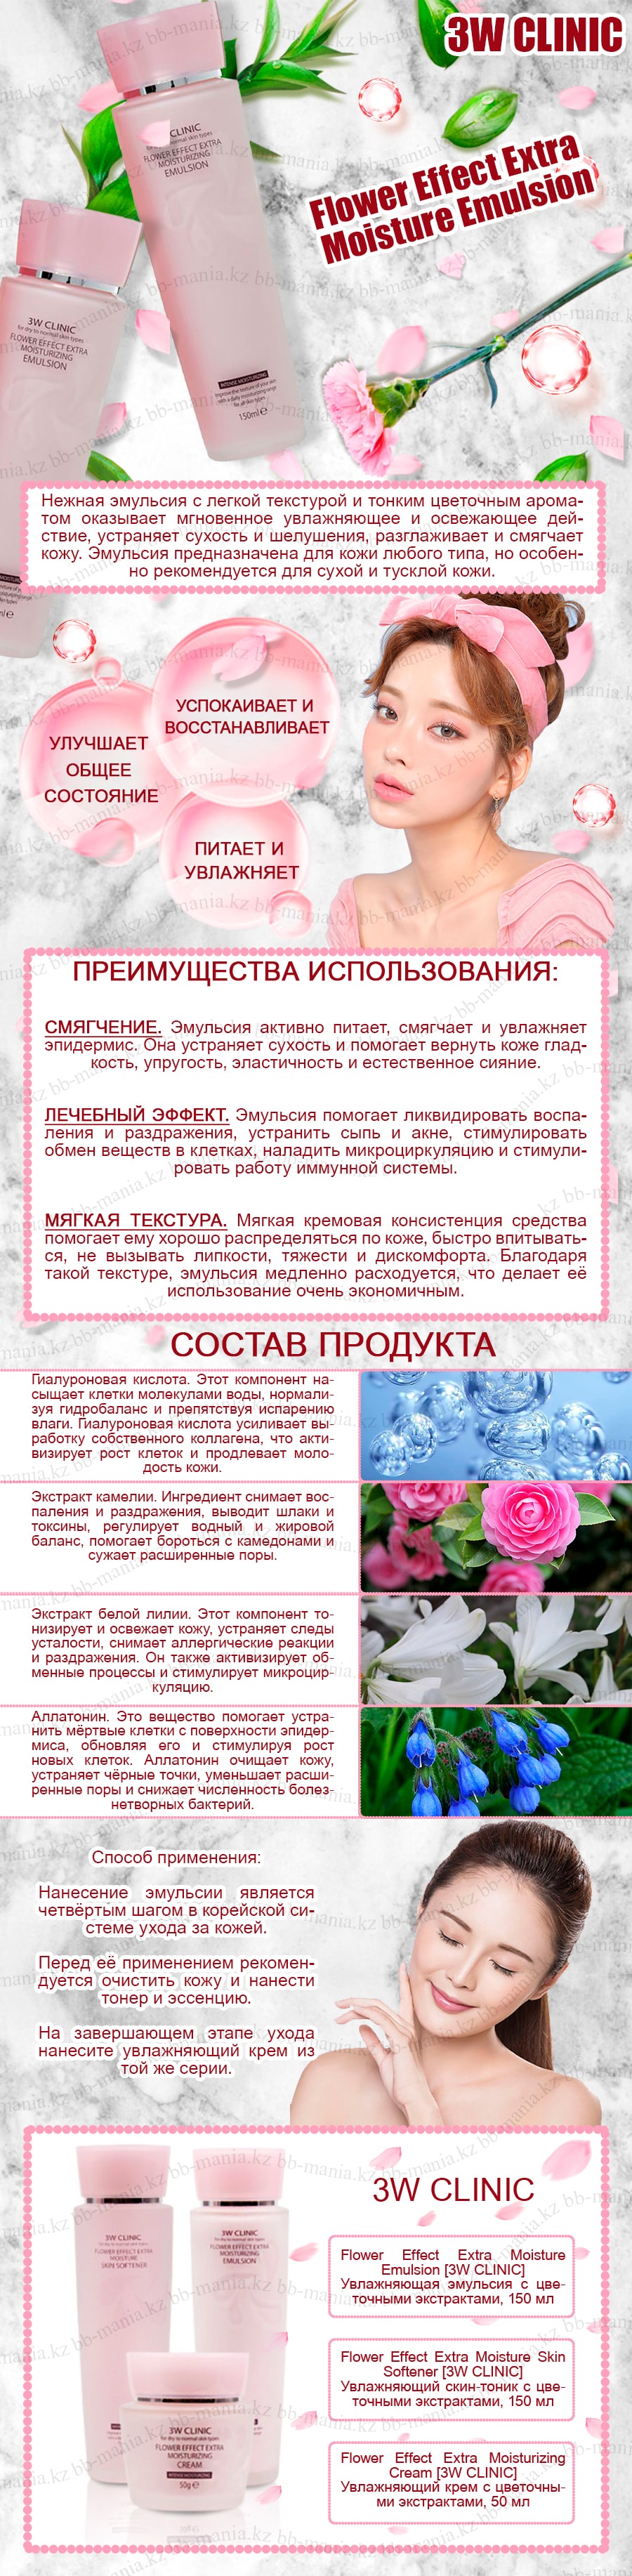 Flower-Effect-Extra-Moisture-Emulsion-[3W-CLINIC]-min